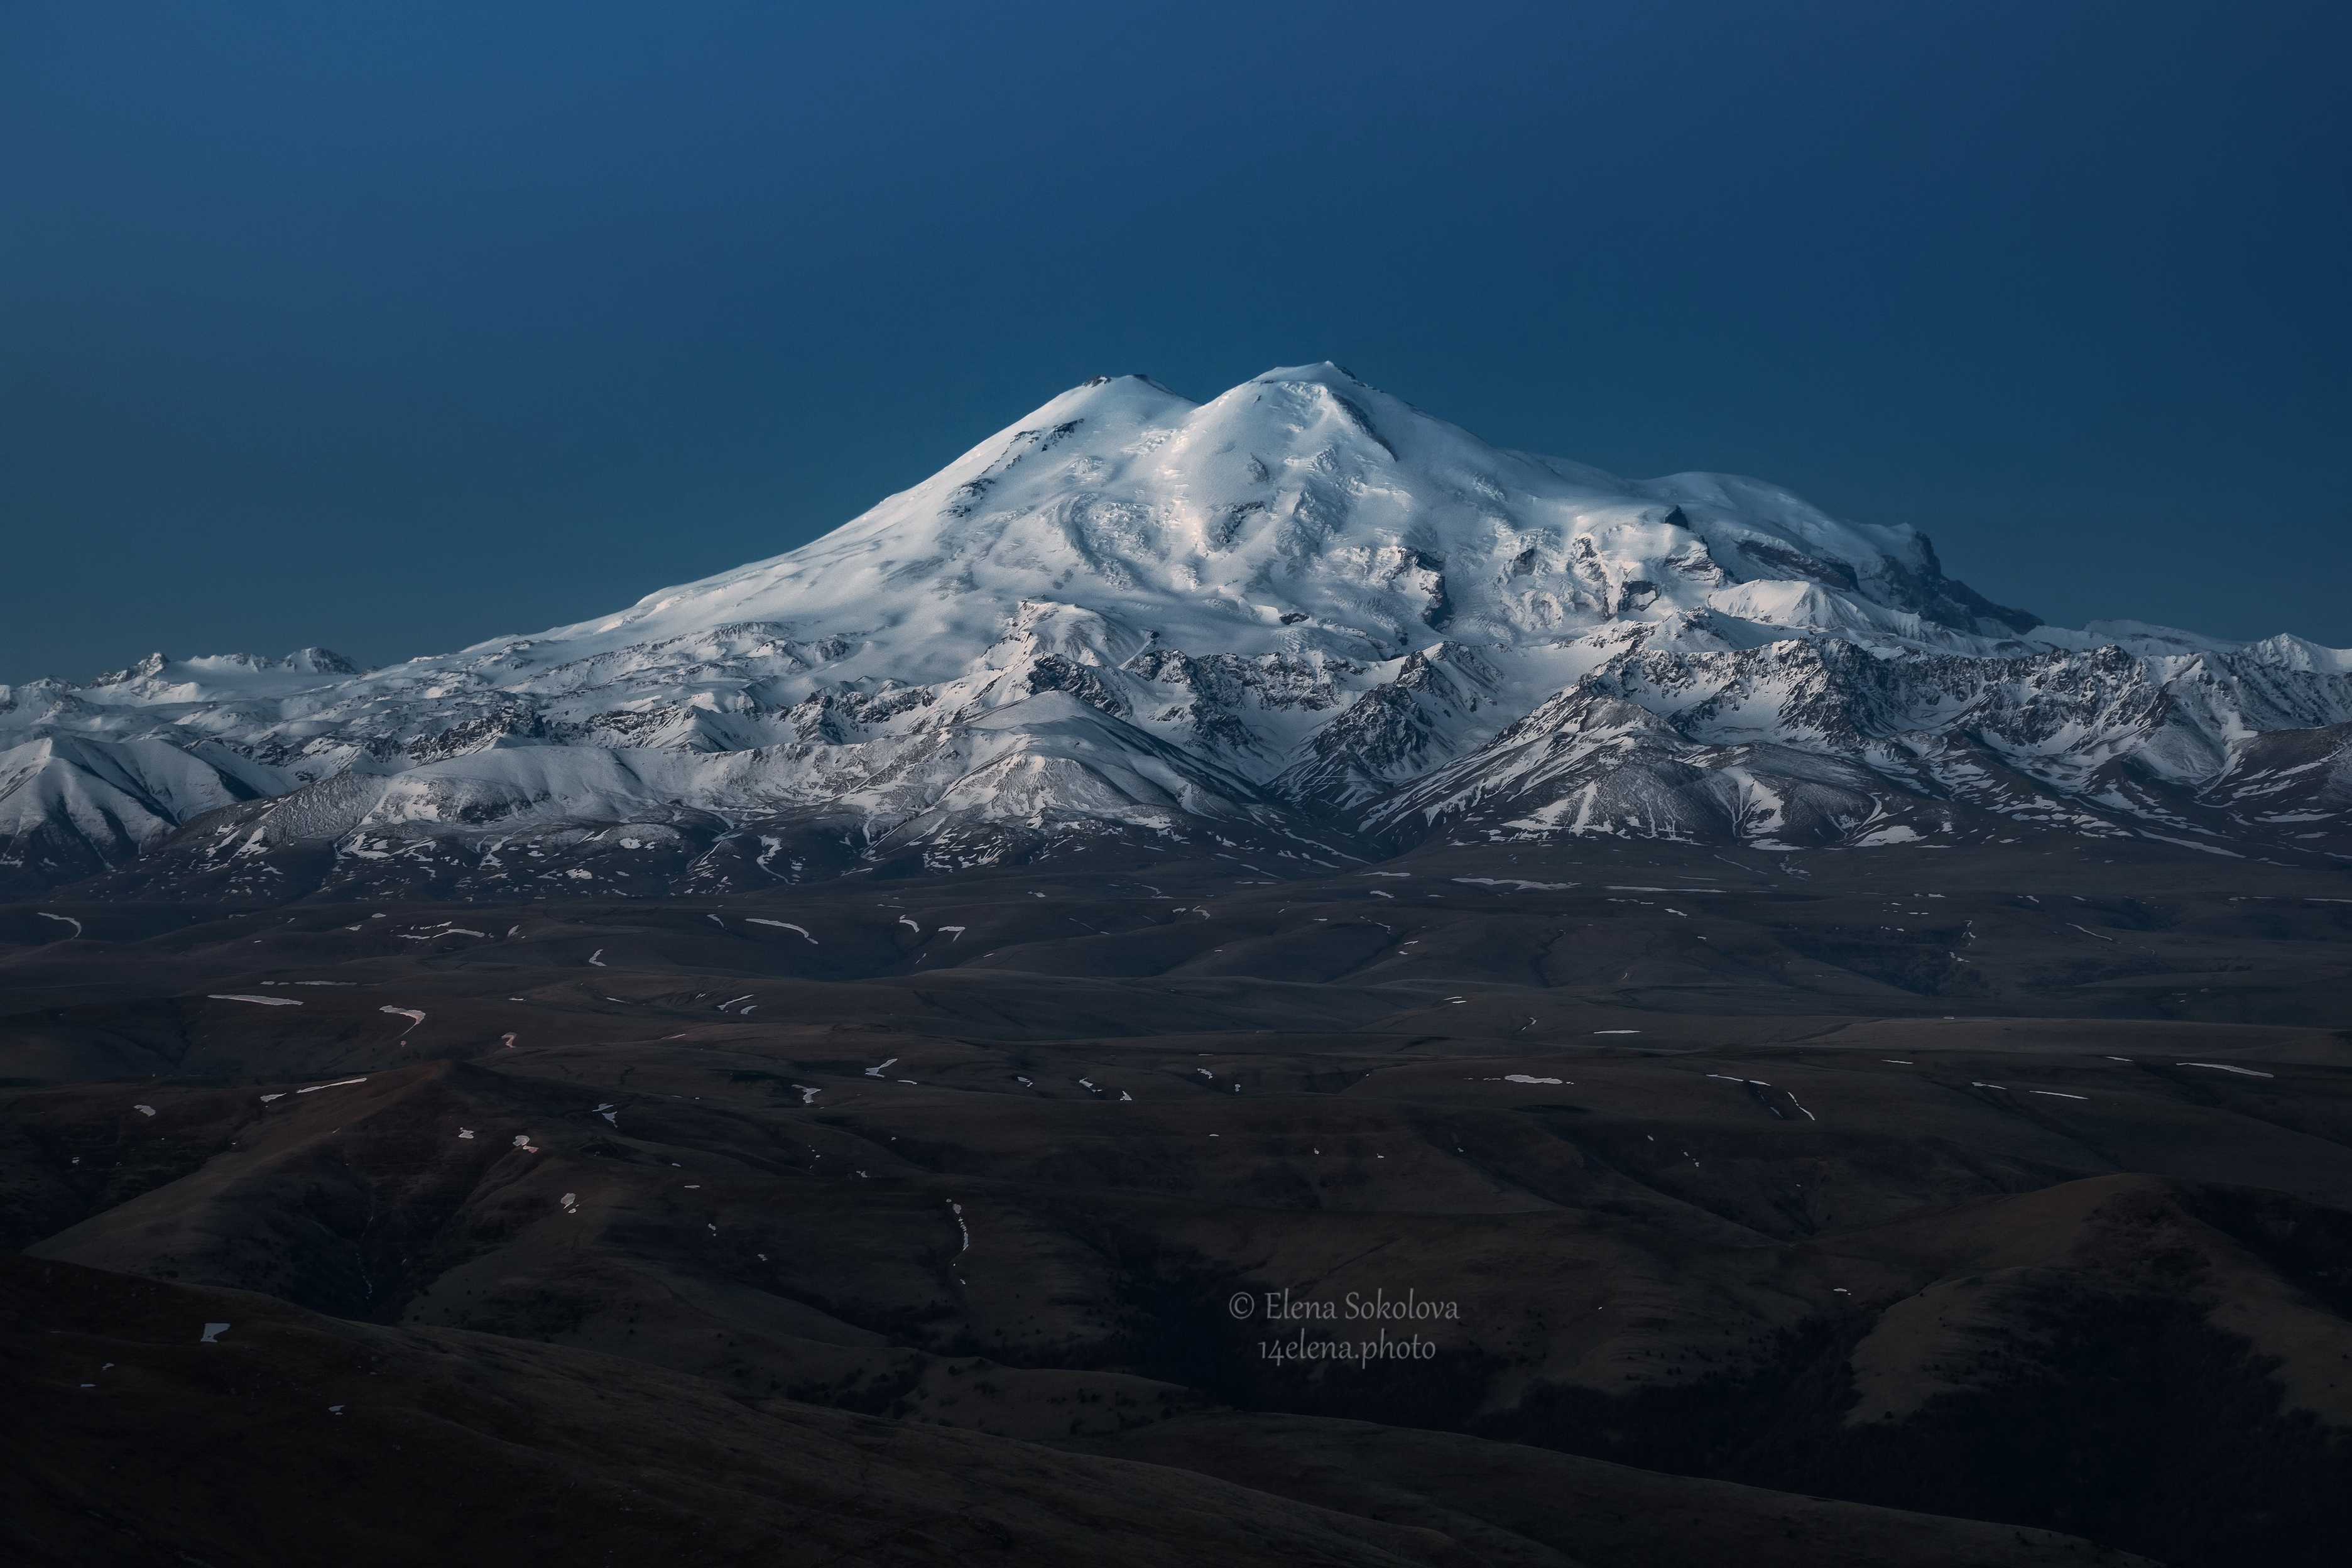 General 3744x2496 mountains snowy peak clear sky nature landscape Mount Elbrus snowy mountain snow sky watermarked